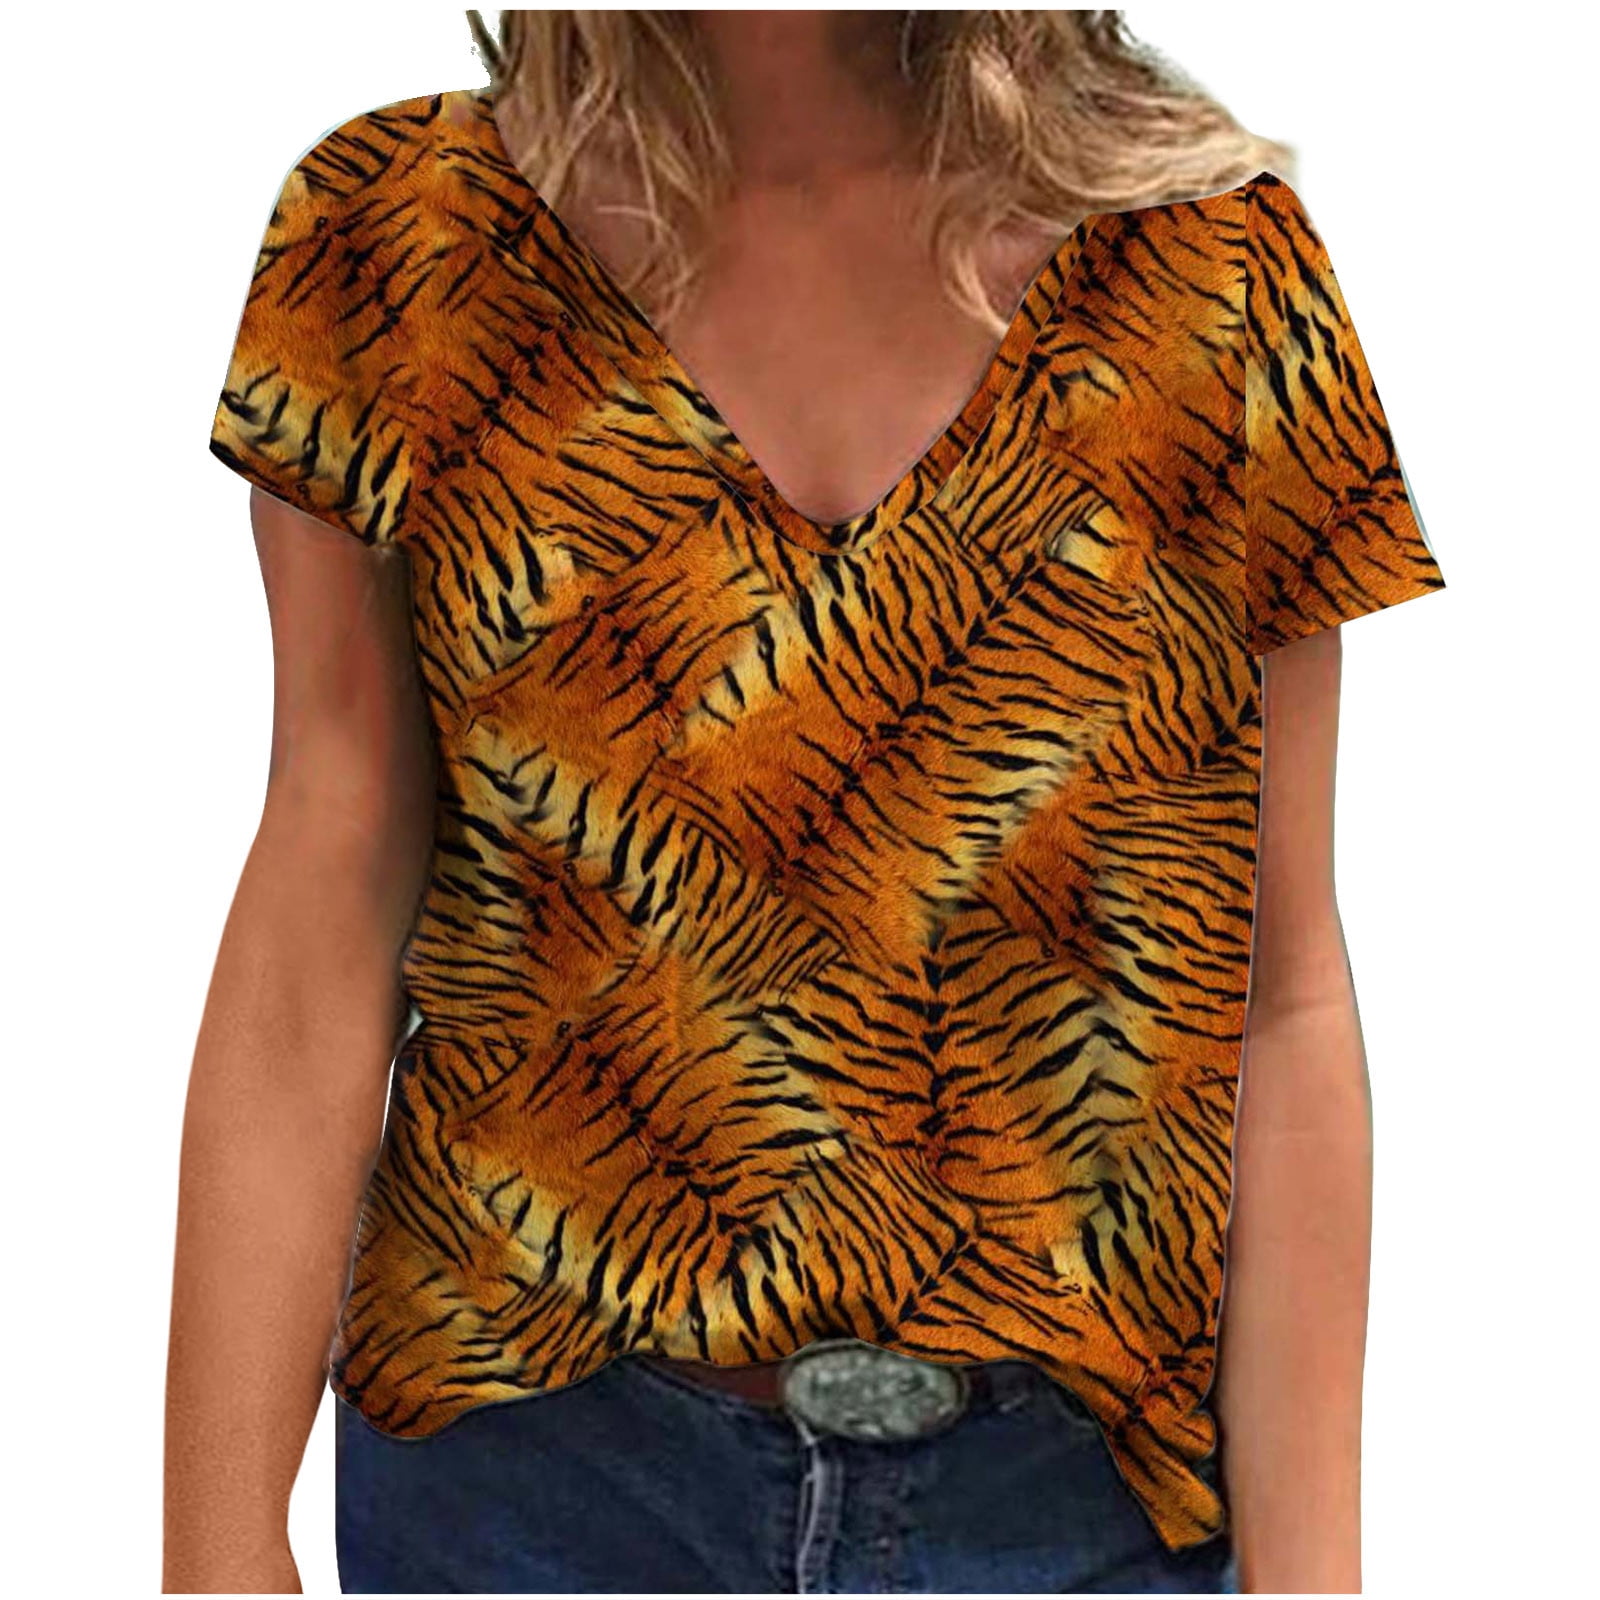 JGGSPWM Womens Animal Pattern Tops Adorable Tshirts Tiger Print Blouse V  Neck Tees Cute Graphic Tunic Short Sleeve Shirts Orange L